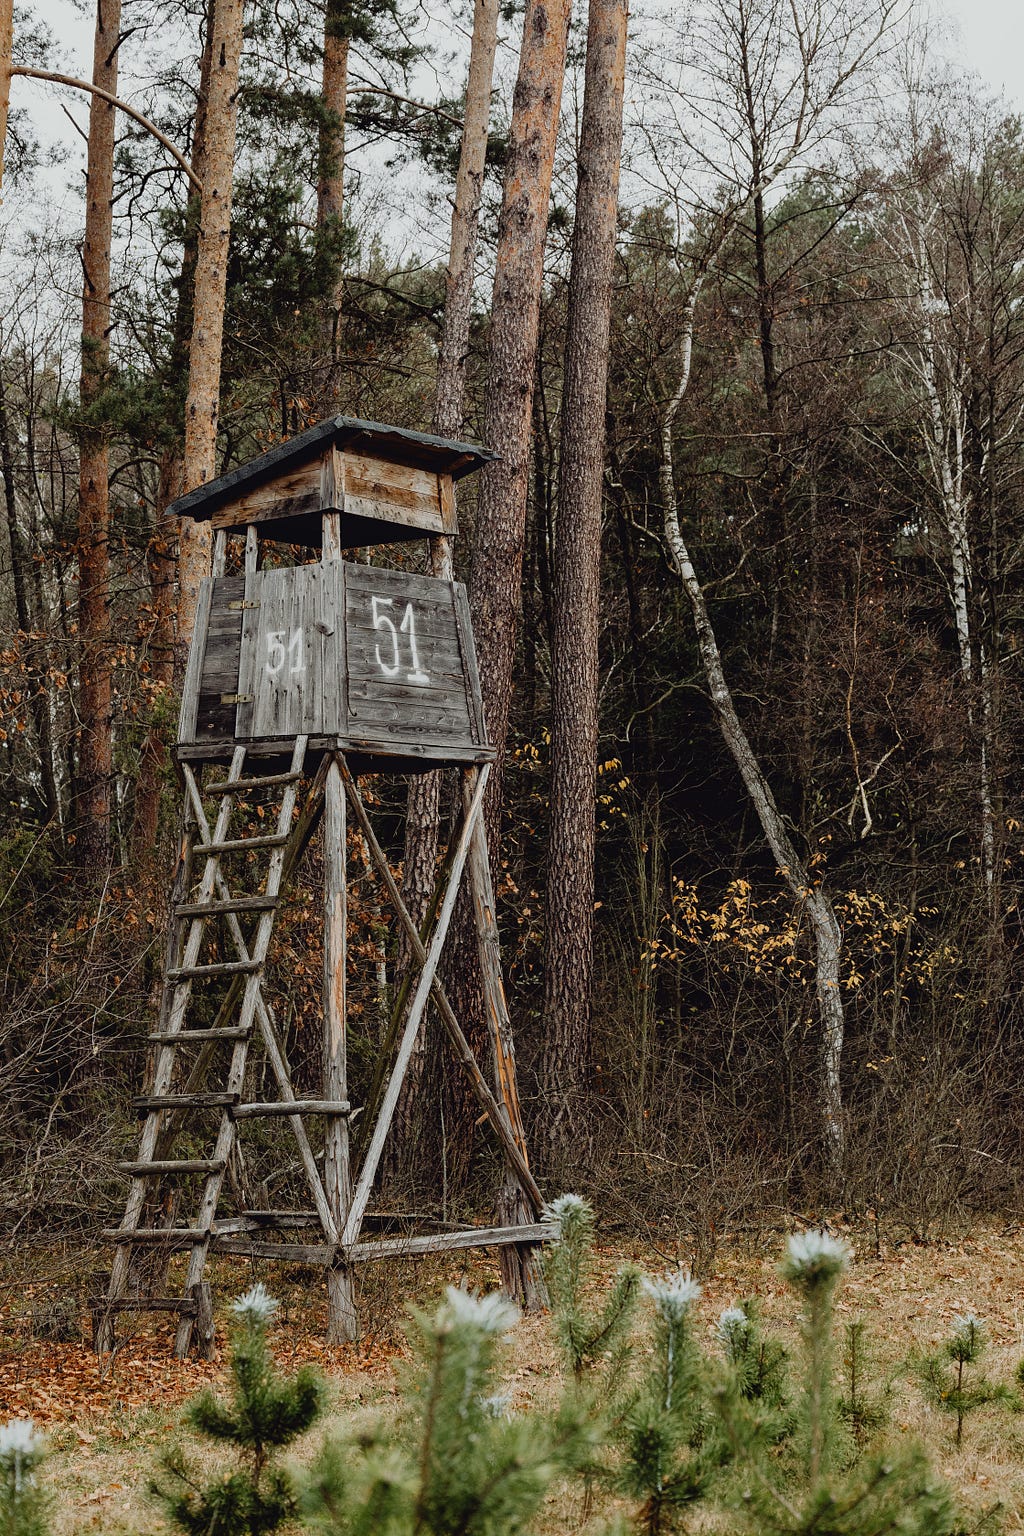 Deer camp 51 — one of many across the country. Source: Pexels — Karolina Grabowska.